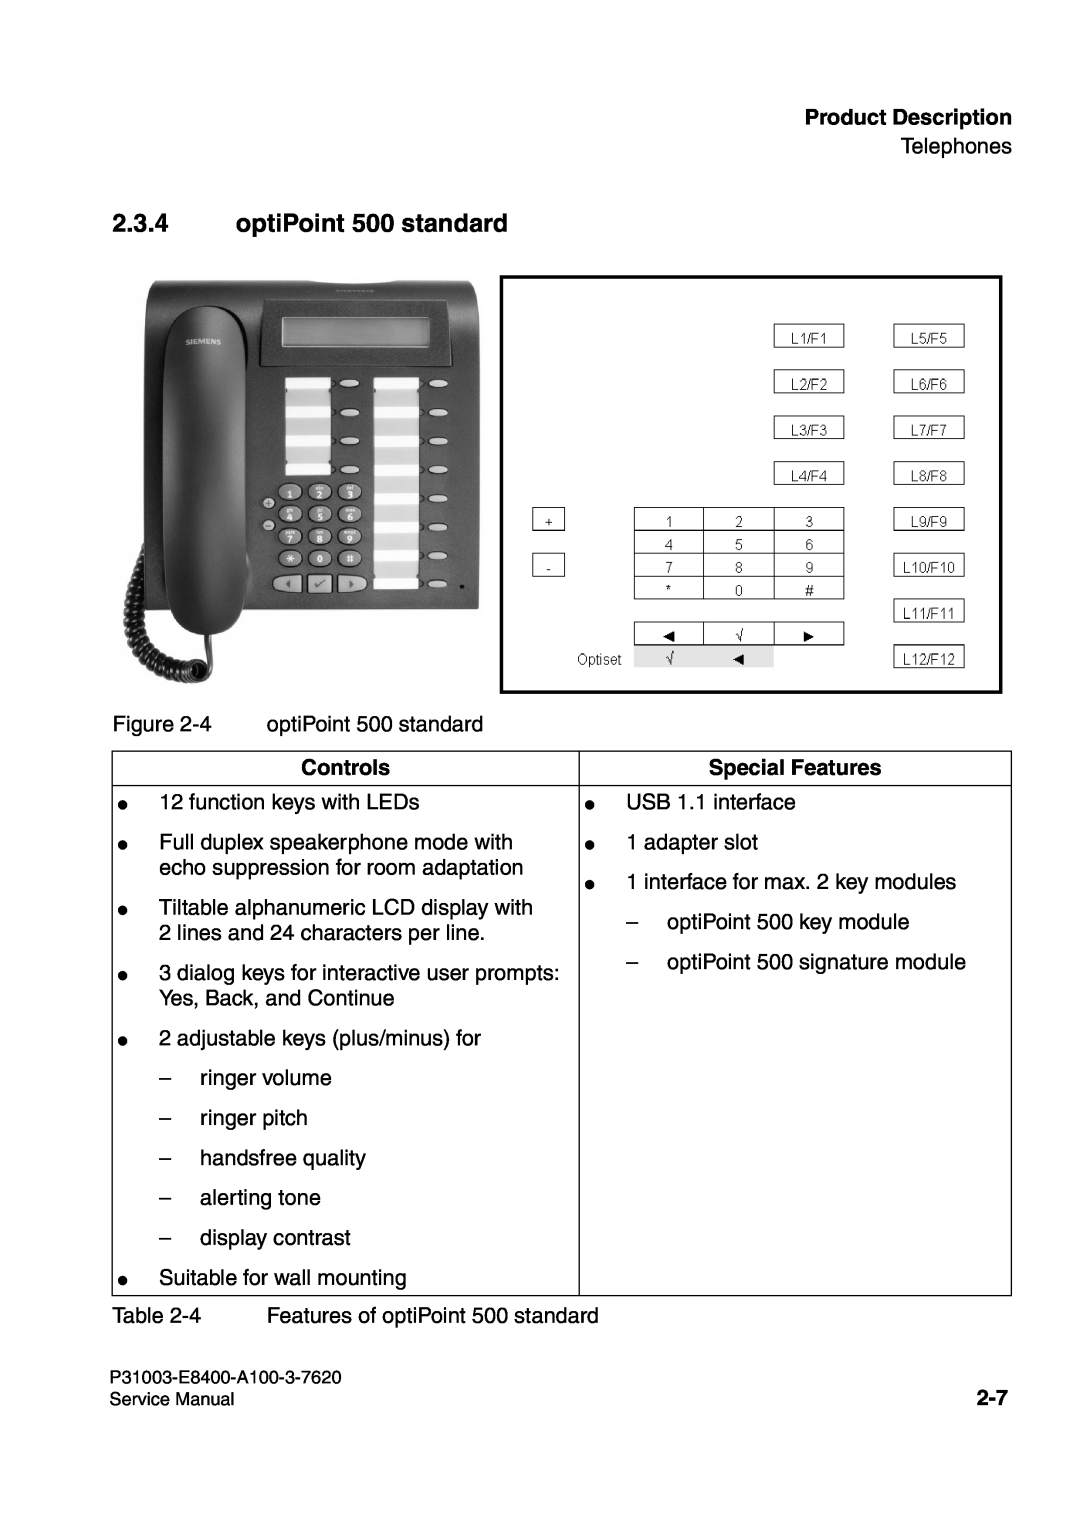 Siemens service manual optiPoint 500 standard, Product Description, Controls, Special Features 